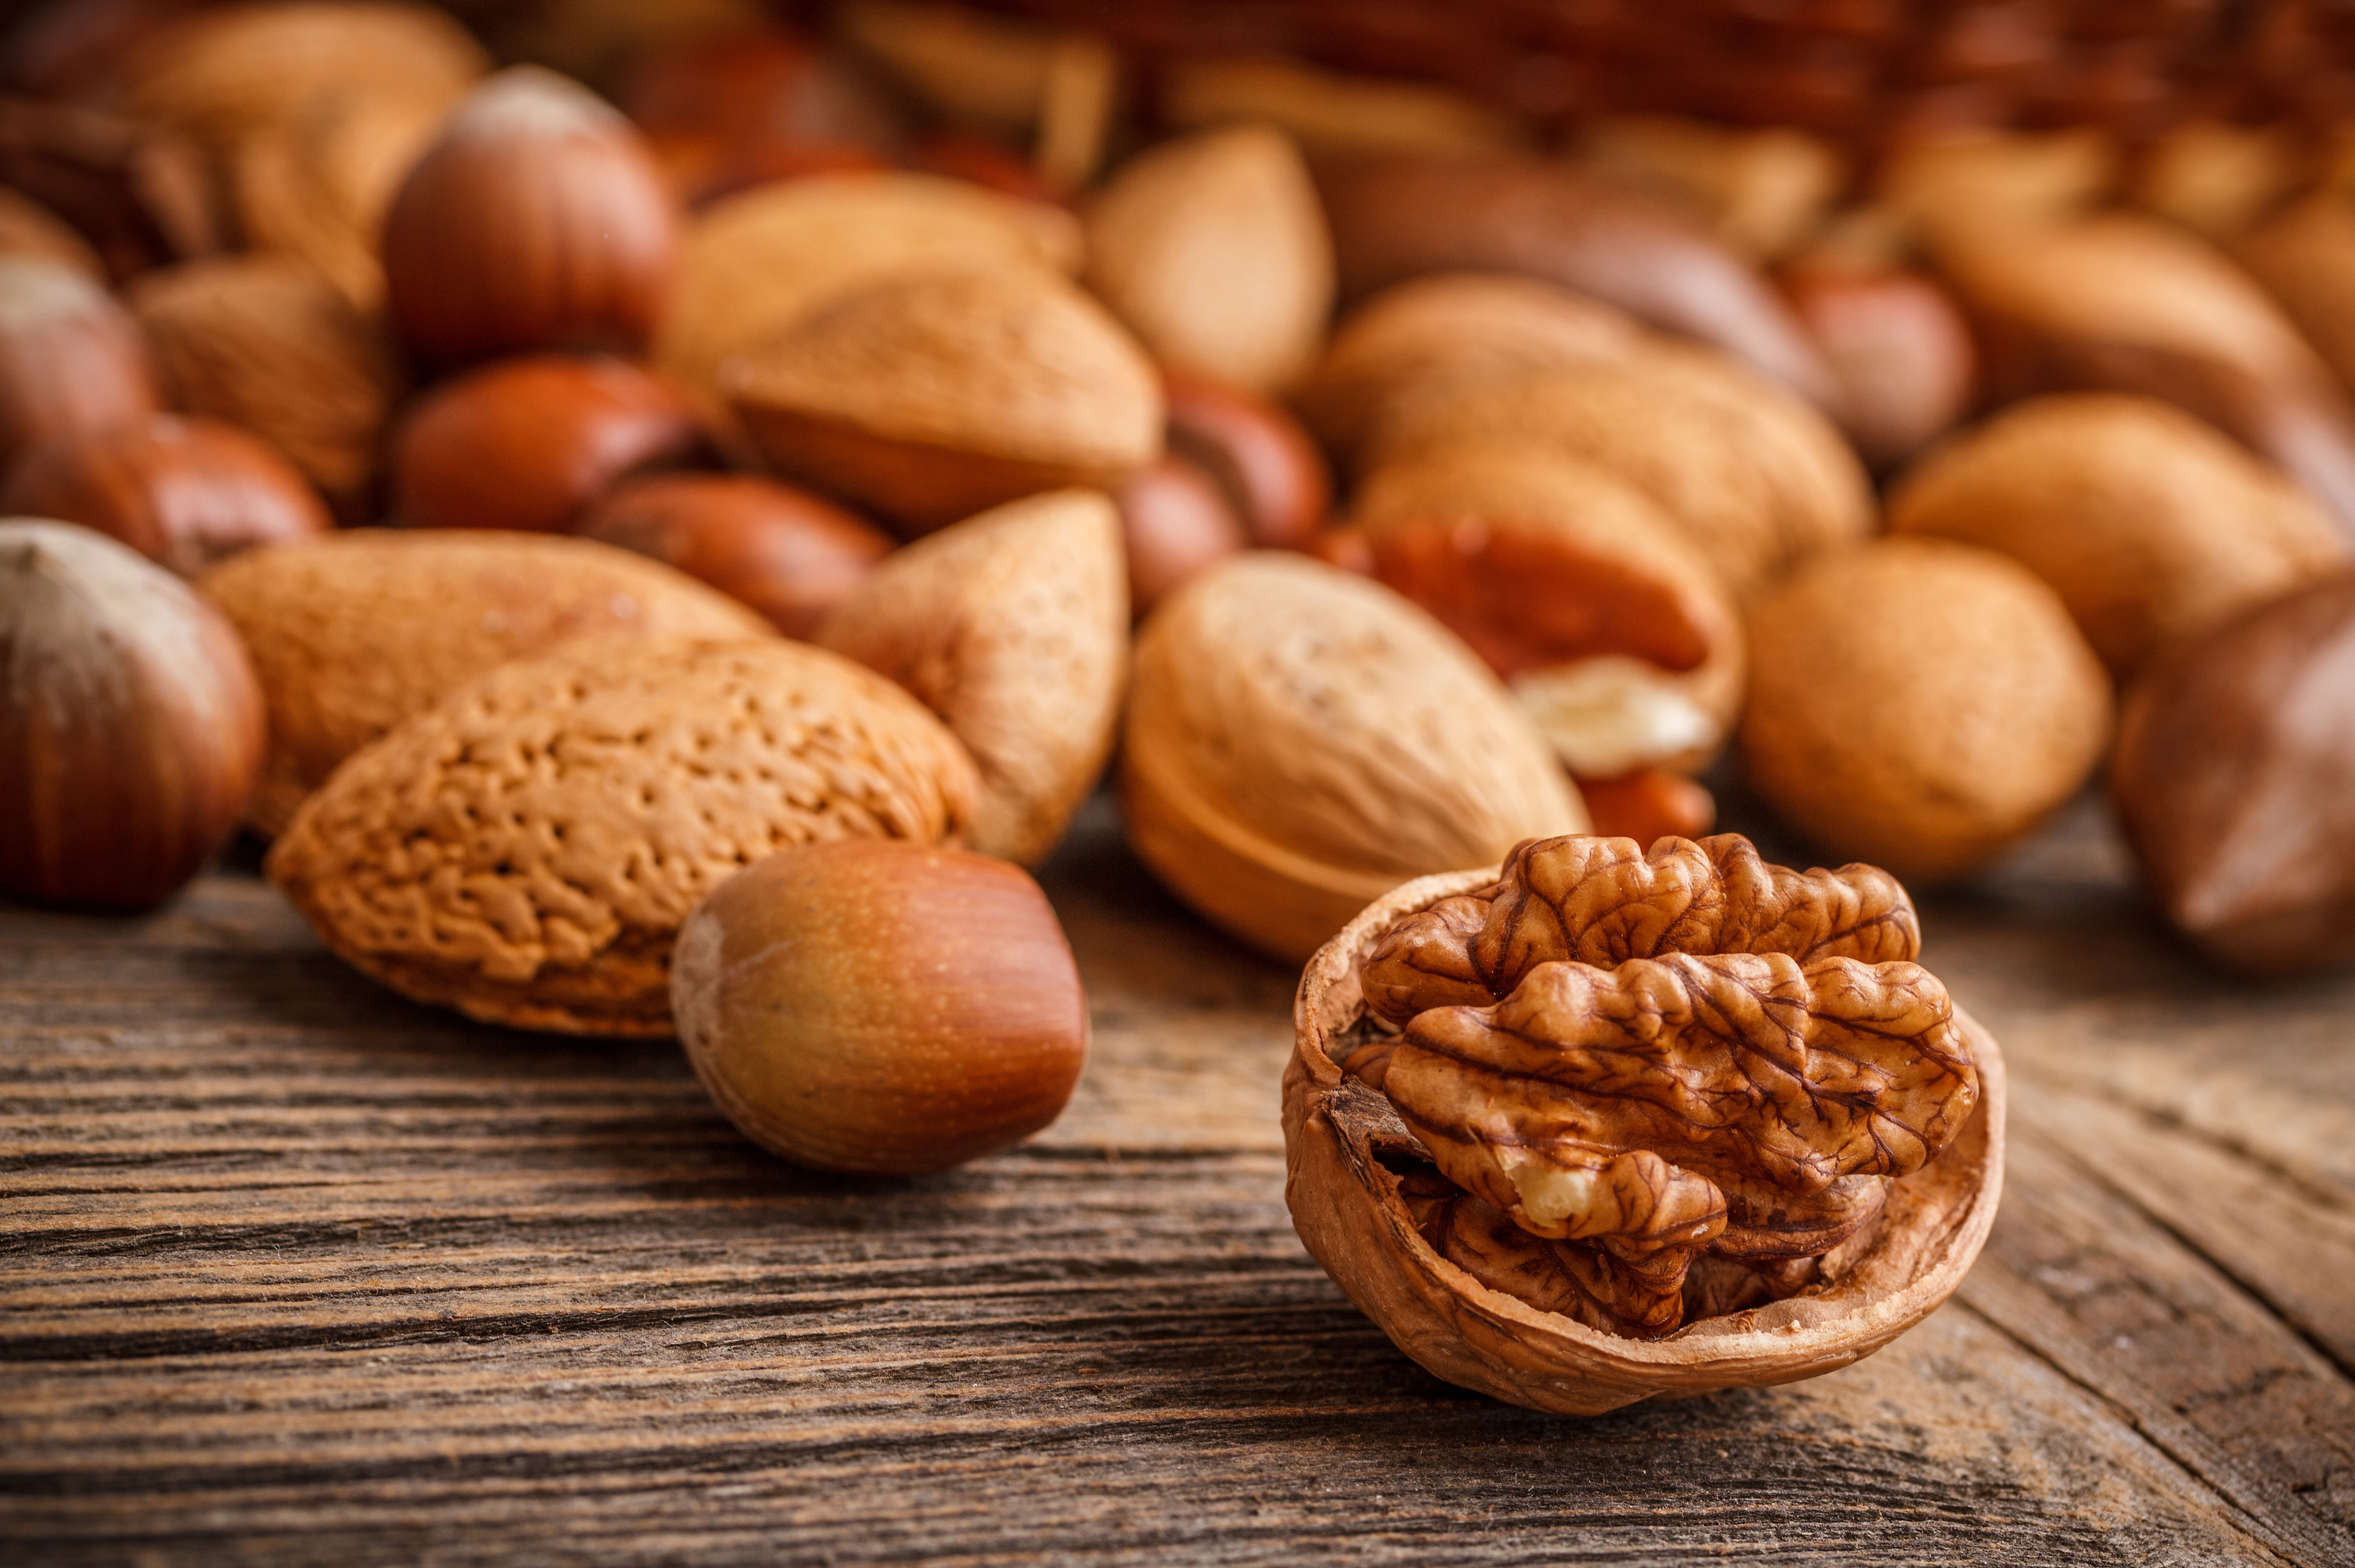 wallnut and almond lot, nuts, shell, almonds, forest, walnut